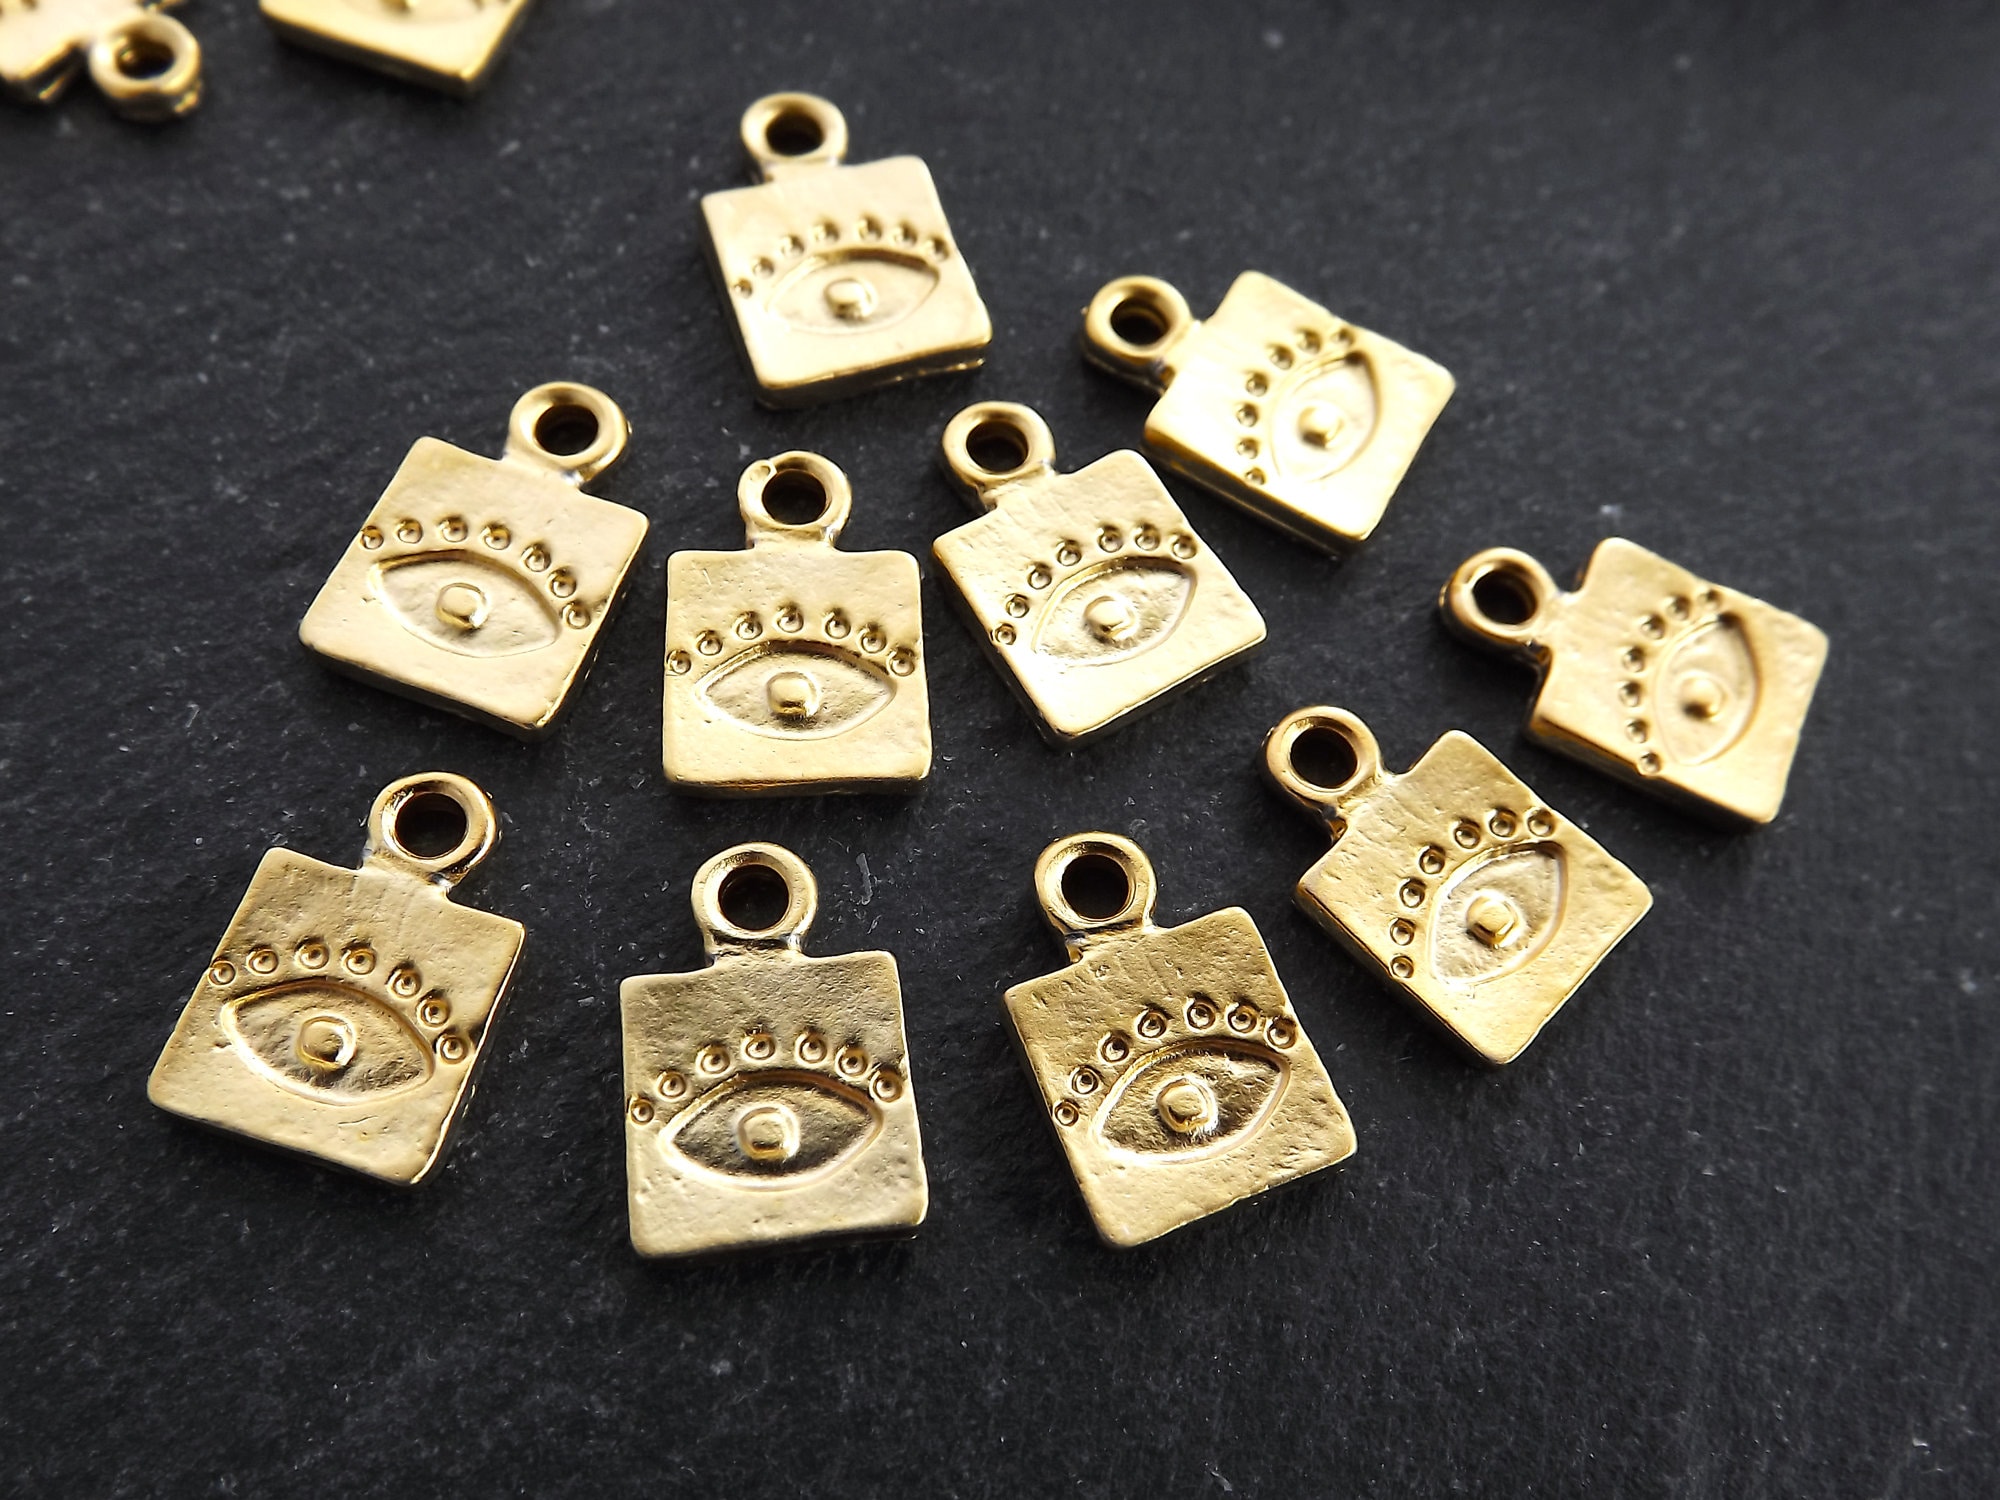 10PCS CZ Cross Pendant Gorgeous Charm Jewelry Men's & Women's Jewelry Necklace Findings Cubic zirconia Gold Color Pendant Key Charms